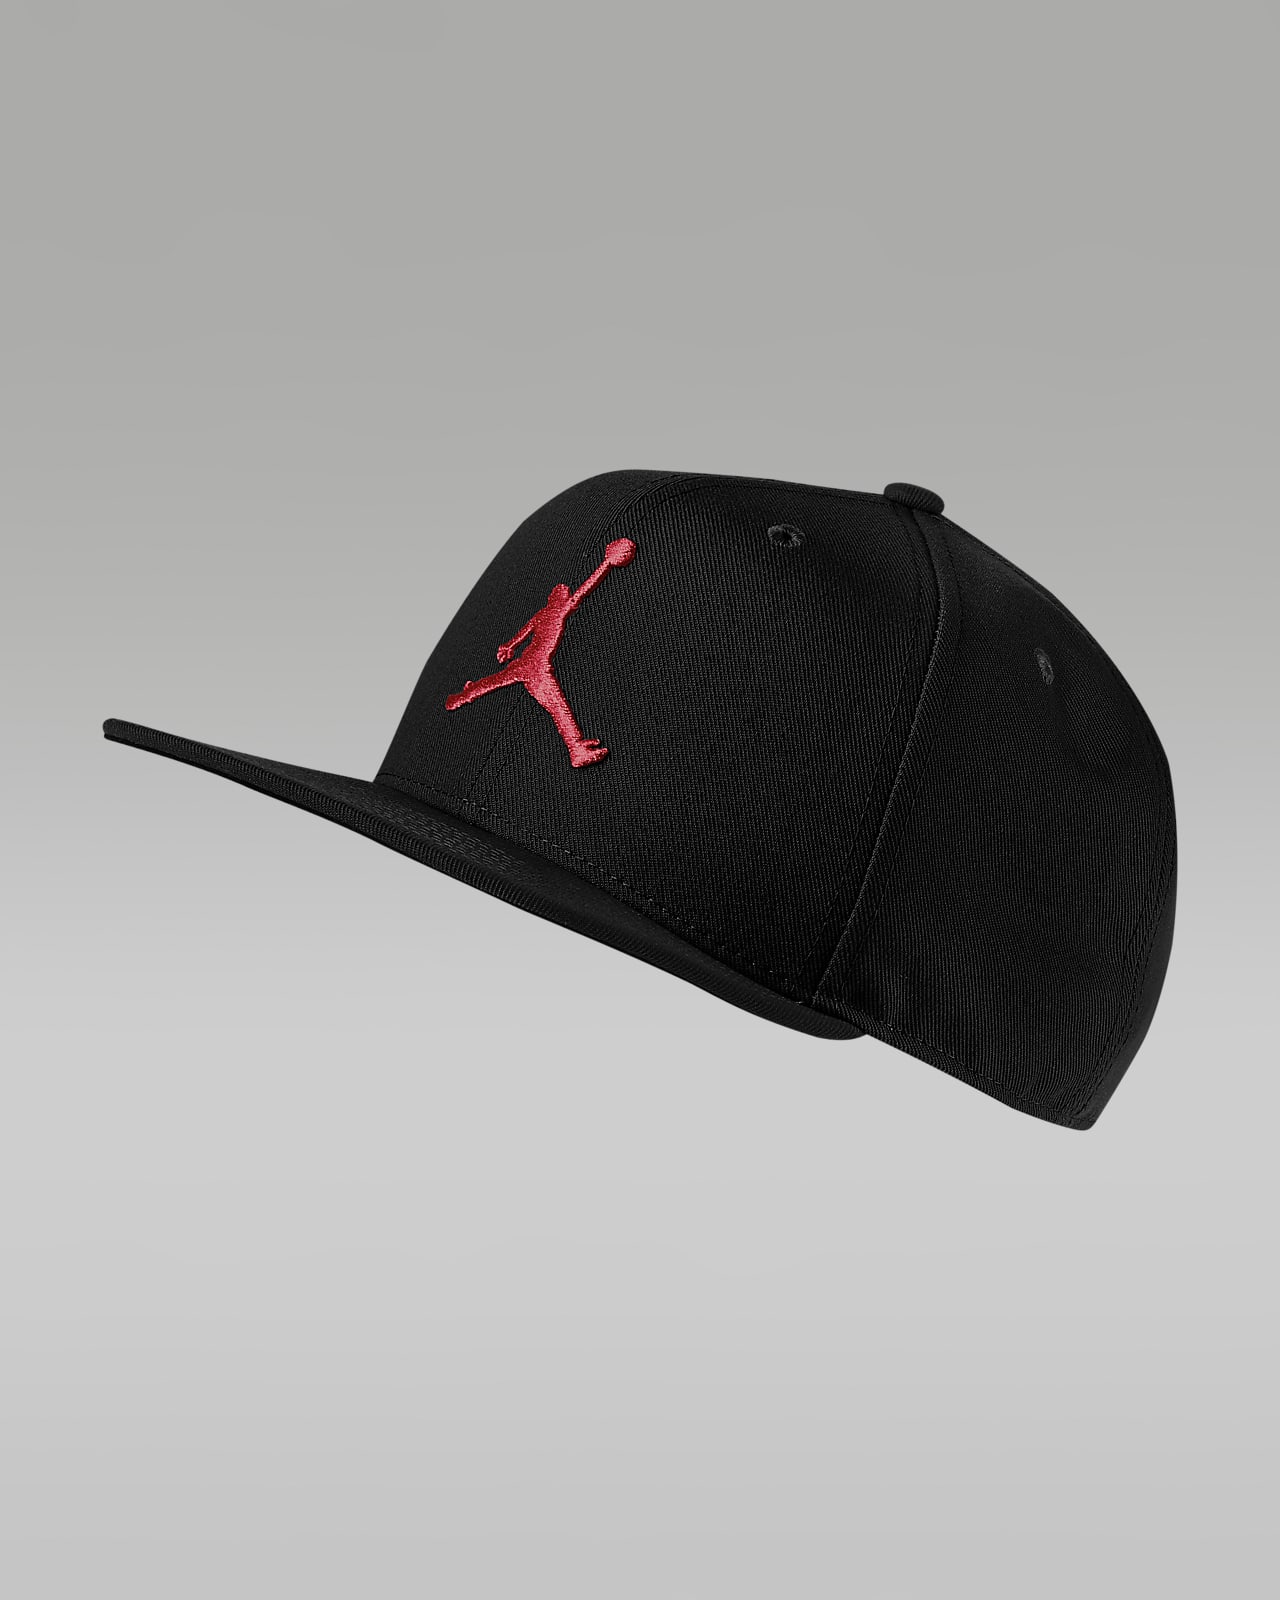 Jordan Pro Jumpman Snapback 帽款